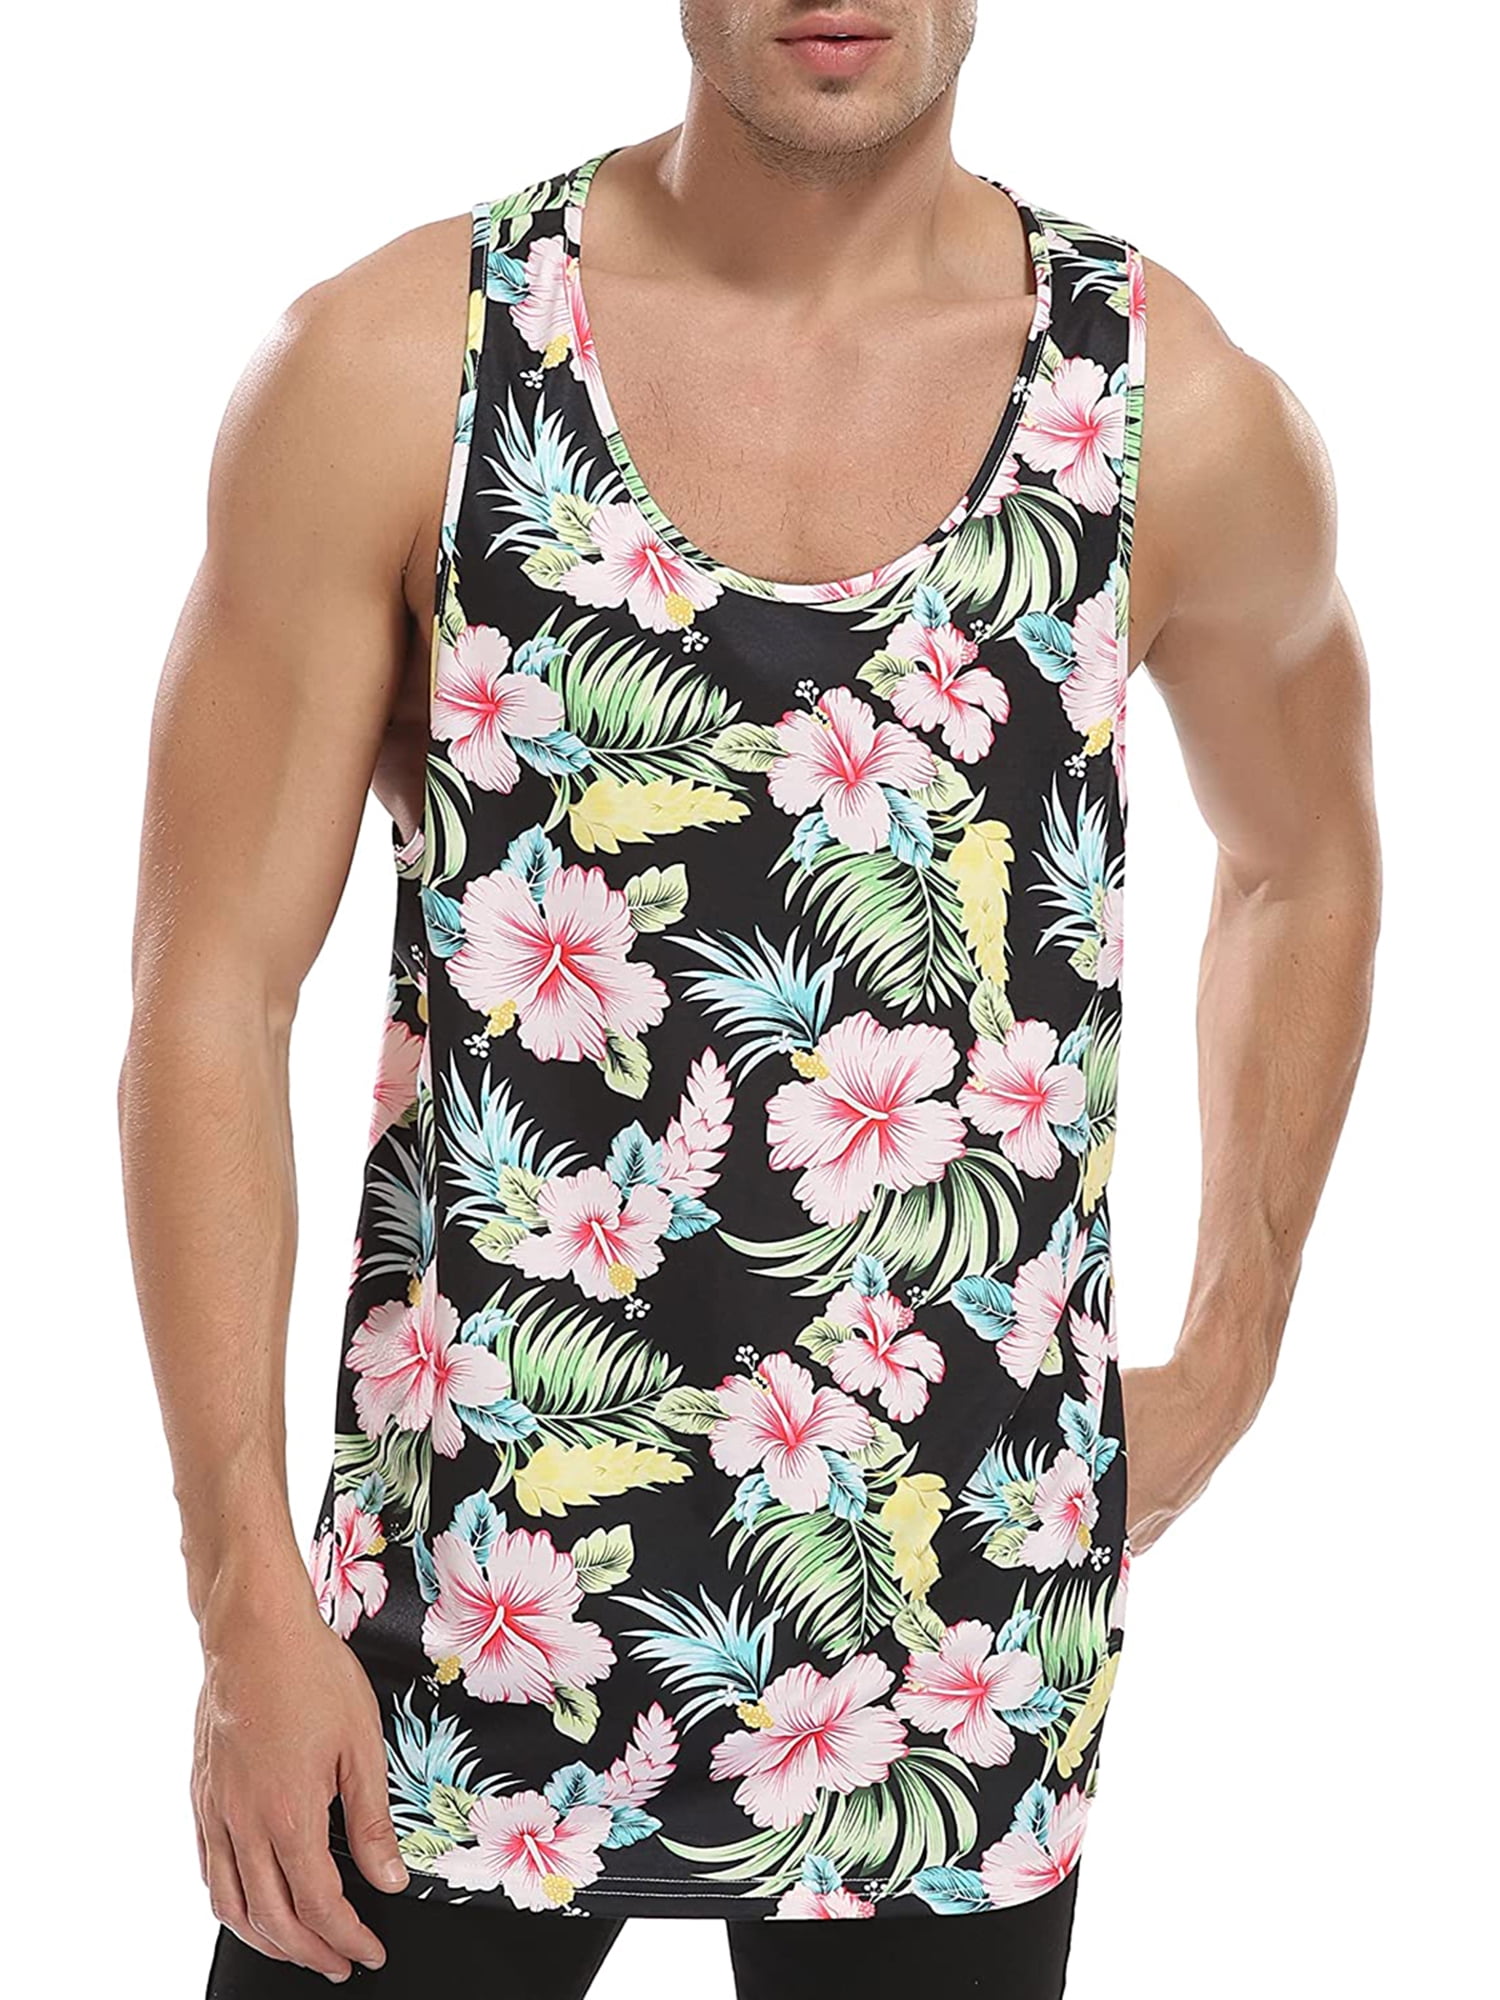 Mens Tank Top Hipster Printed Sleeveless Tank Tops Summer Beach Mens Shirts Gym Muscle T-shirts Sports Tank Top 